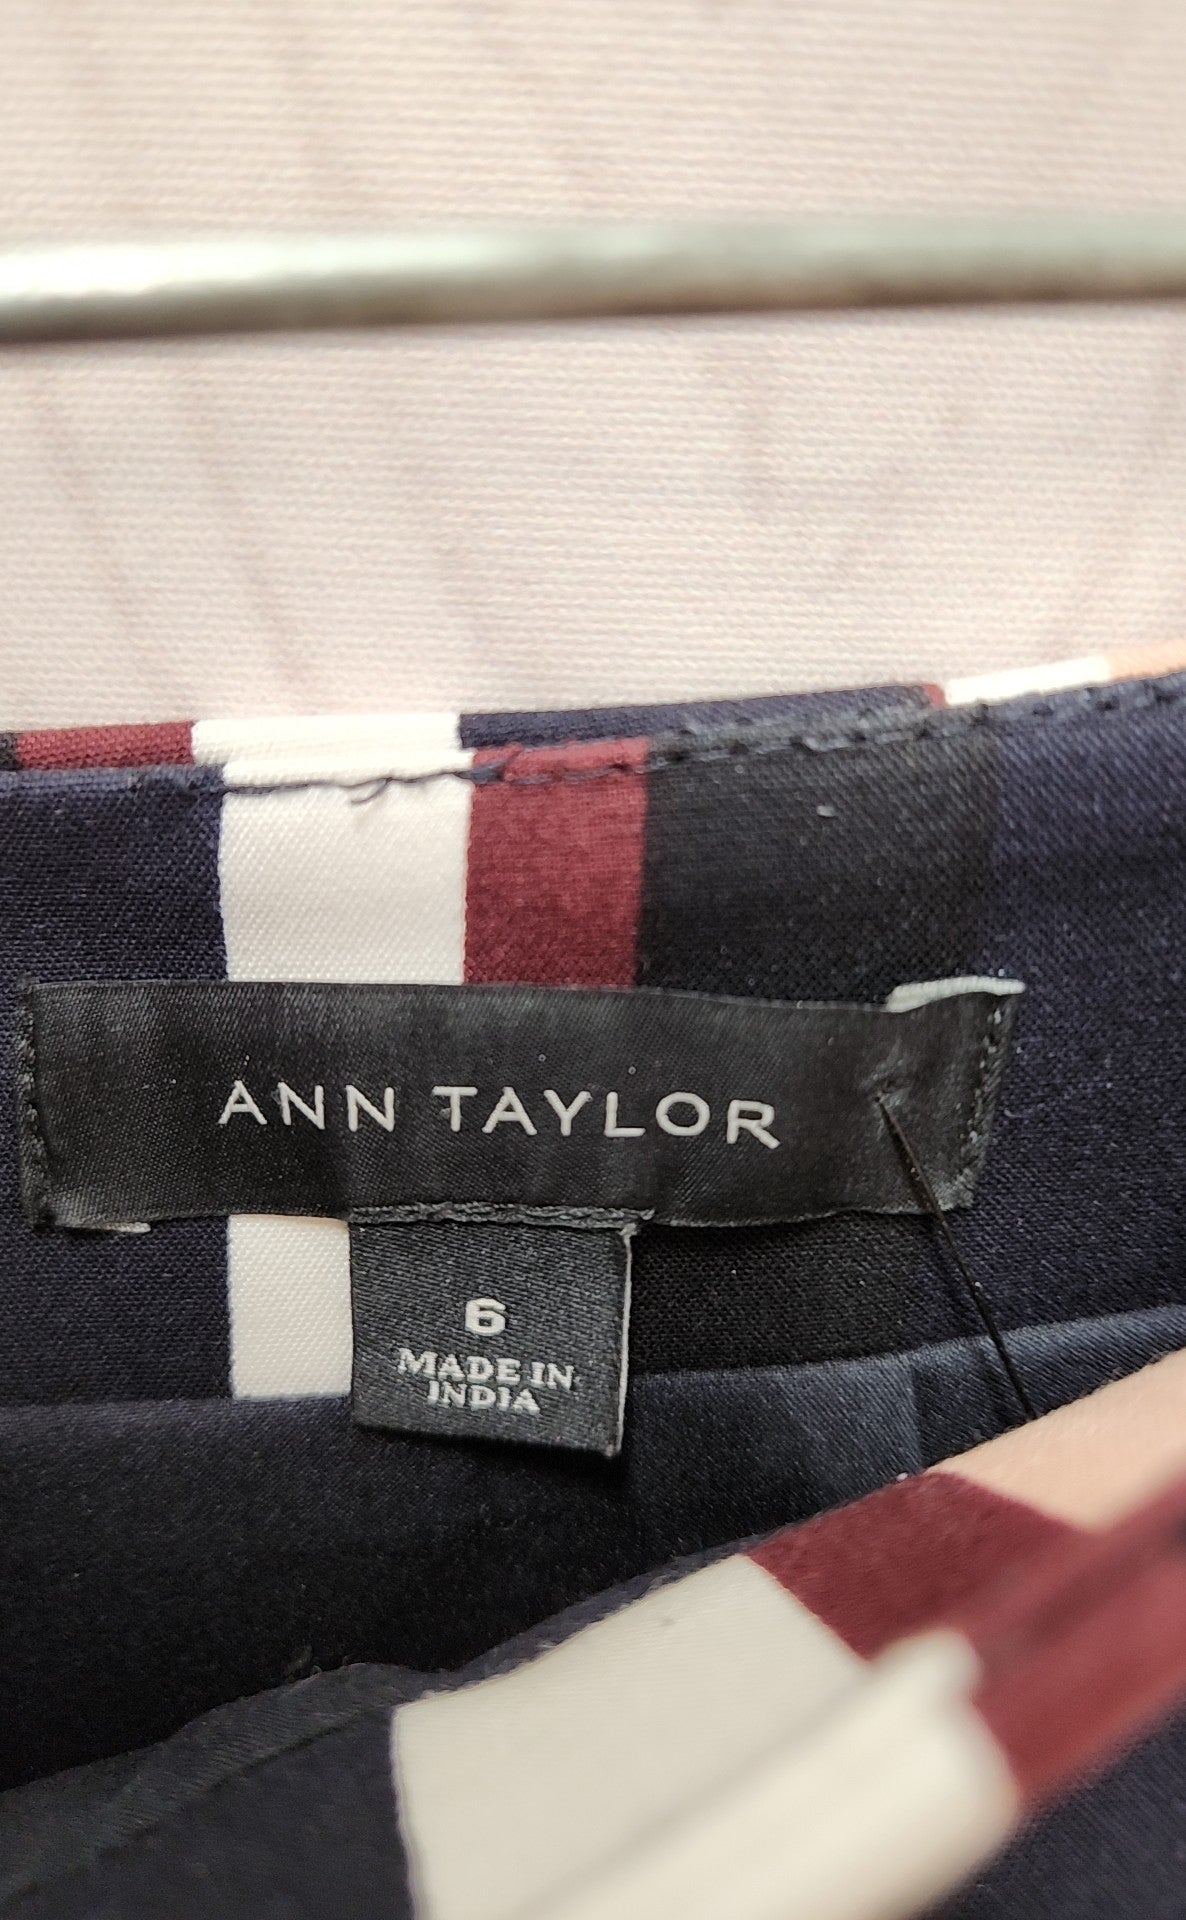 Ann Taylor Women's Size 6 Multi-Color Skirt